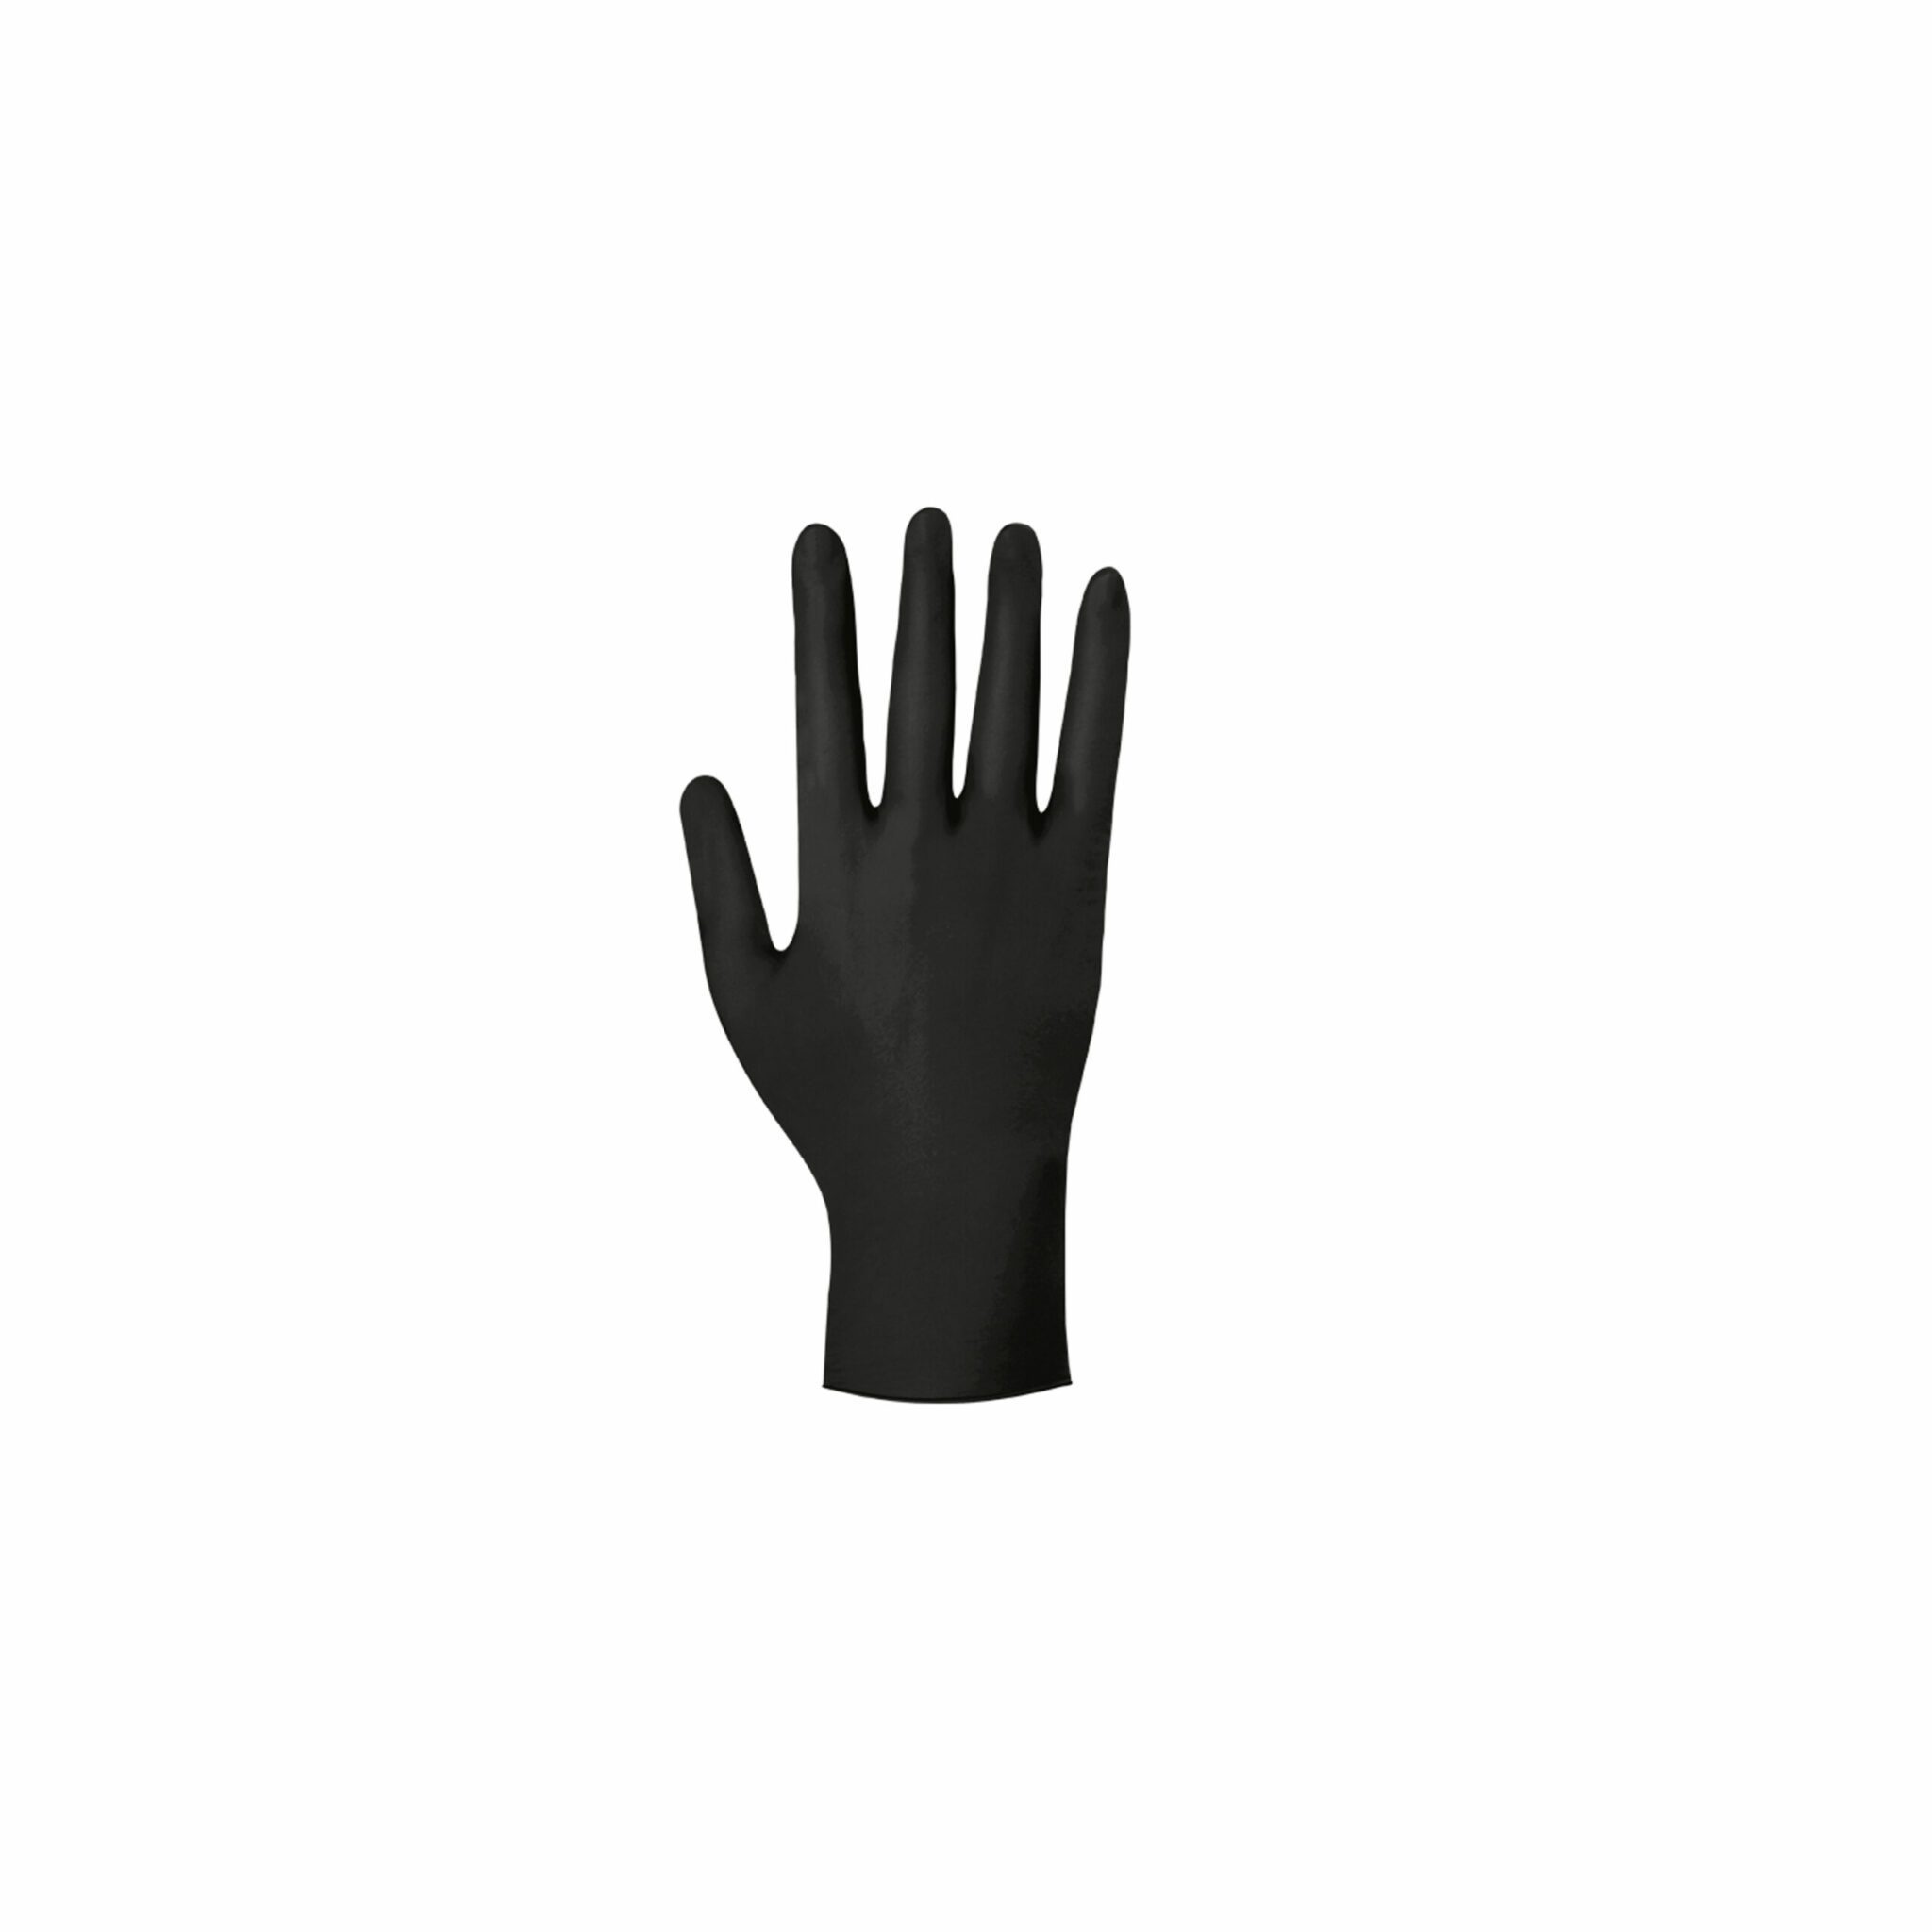 Featured image for “Schwarze Nitril-Handschuhe Gentle-Skin”